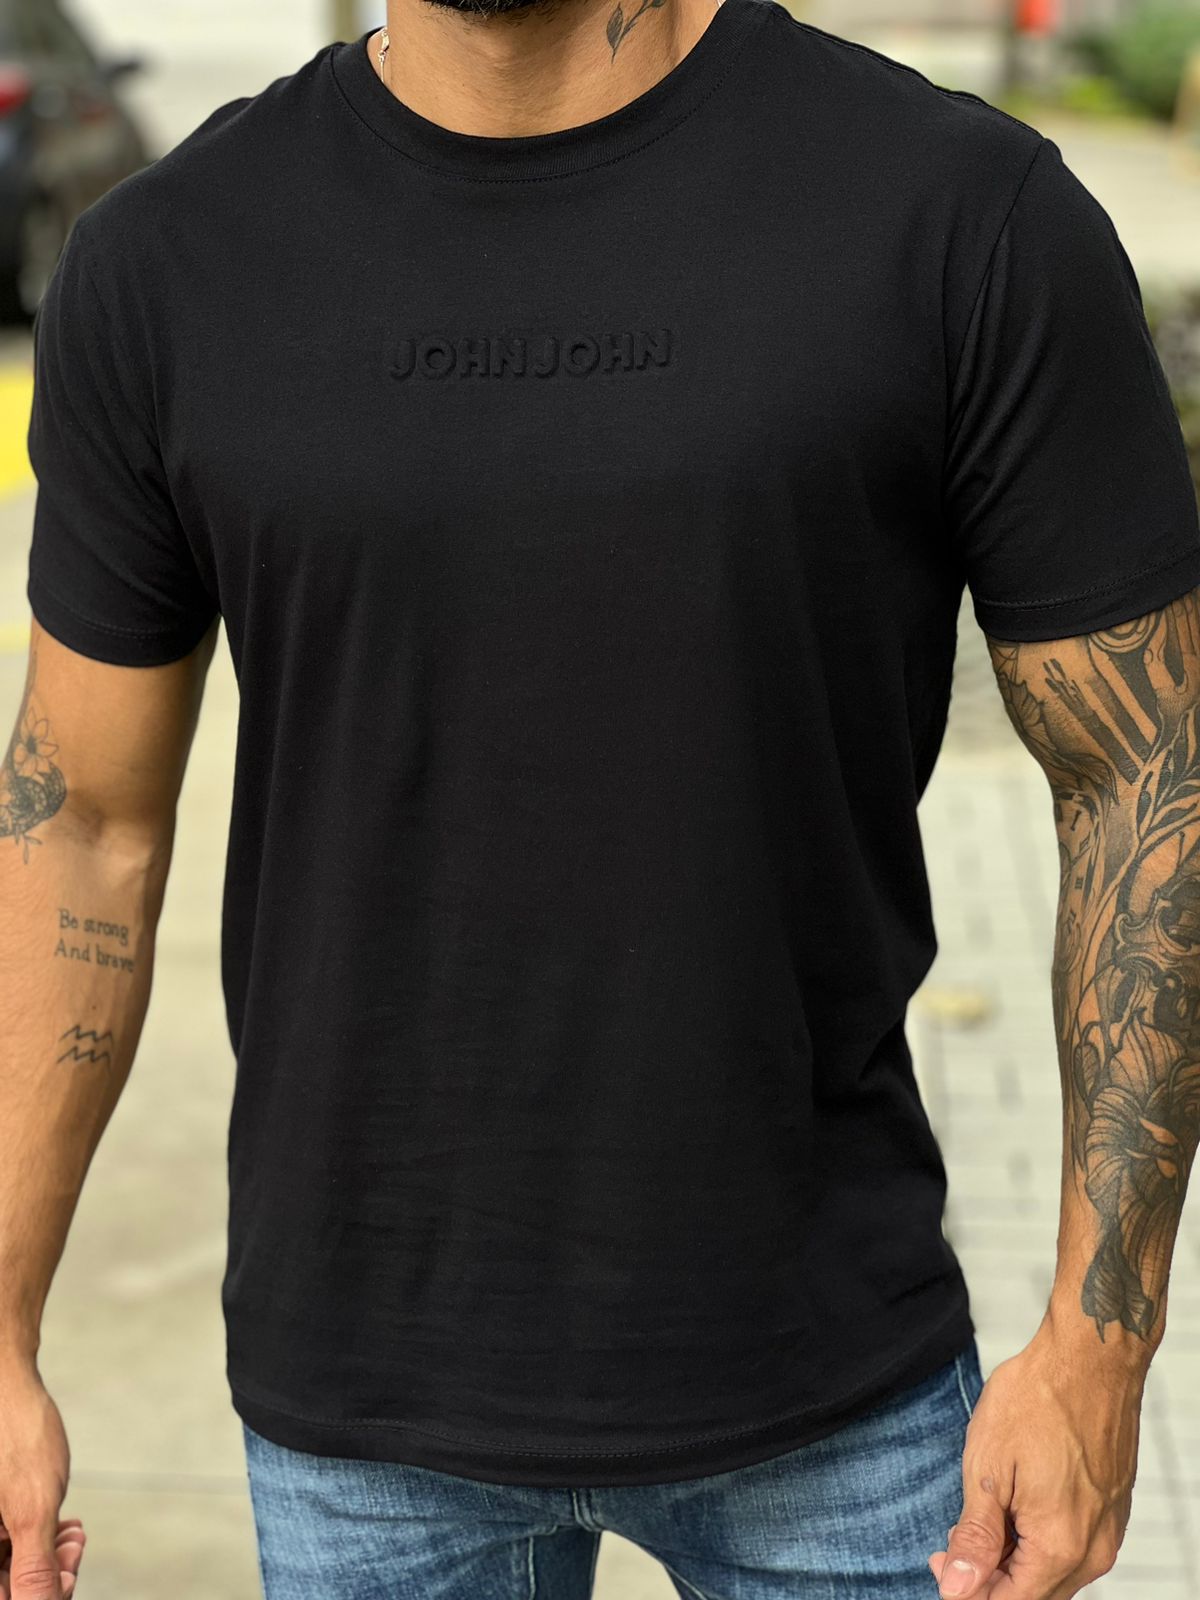 Camiseta John John Faixa Branca Preta – Favoretti Multmarcas